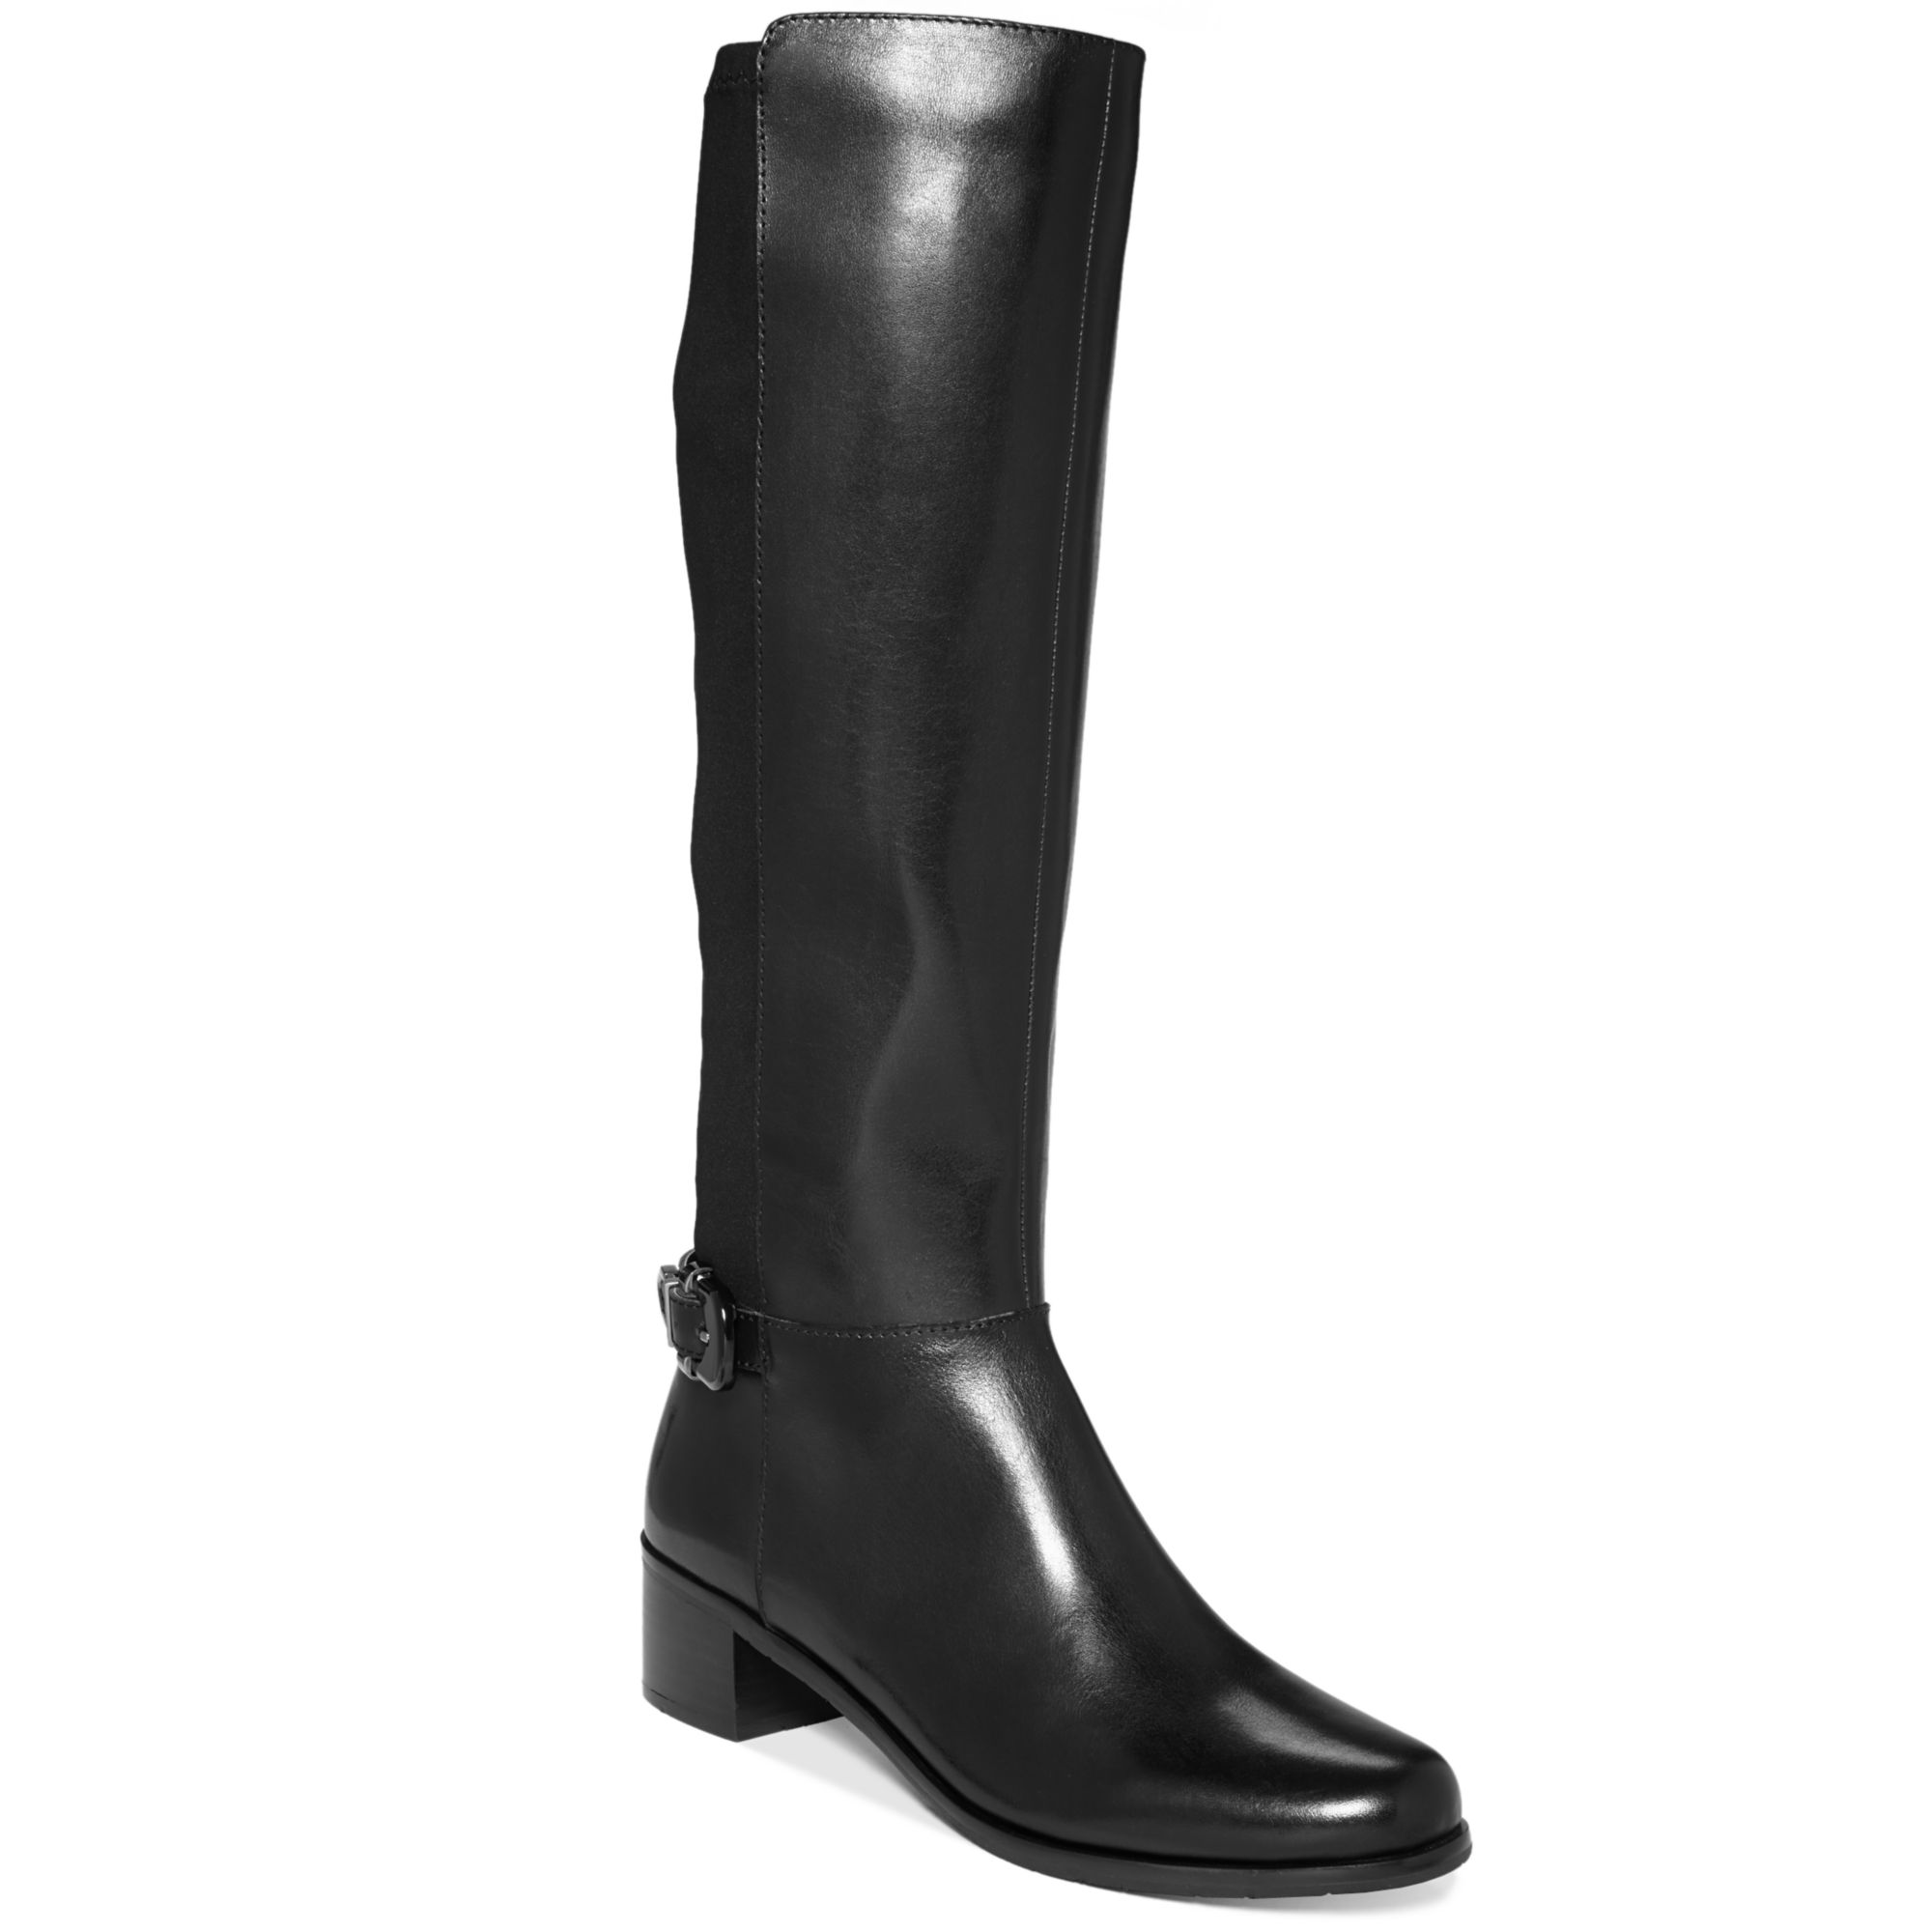 Tahari Karen Tall Riding Boots in Black (Black Leather) | Lyst